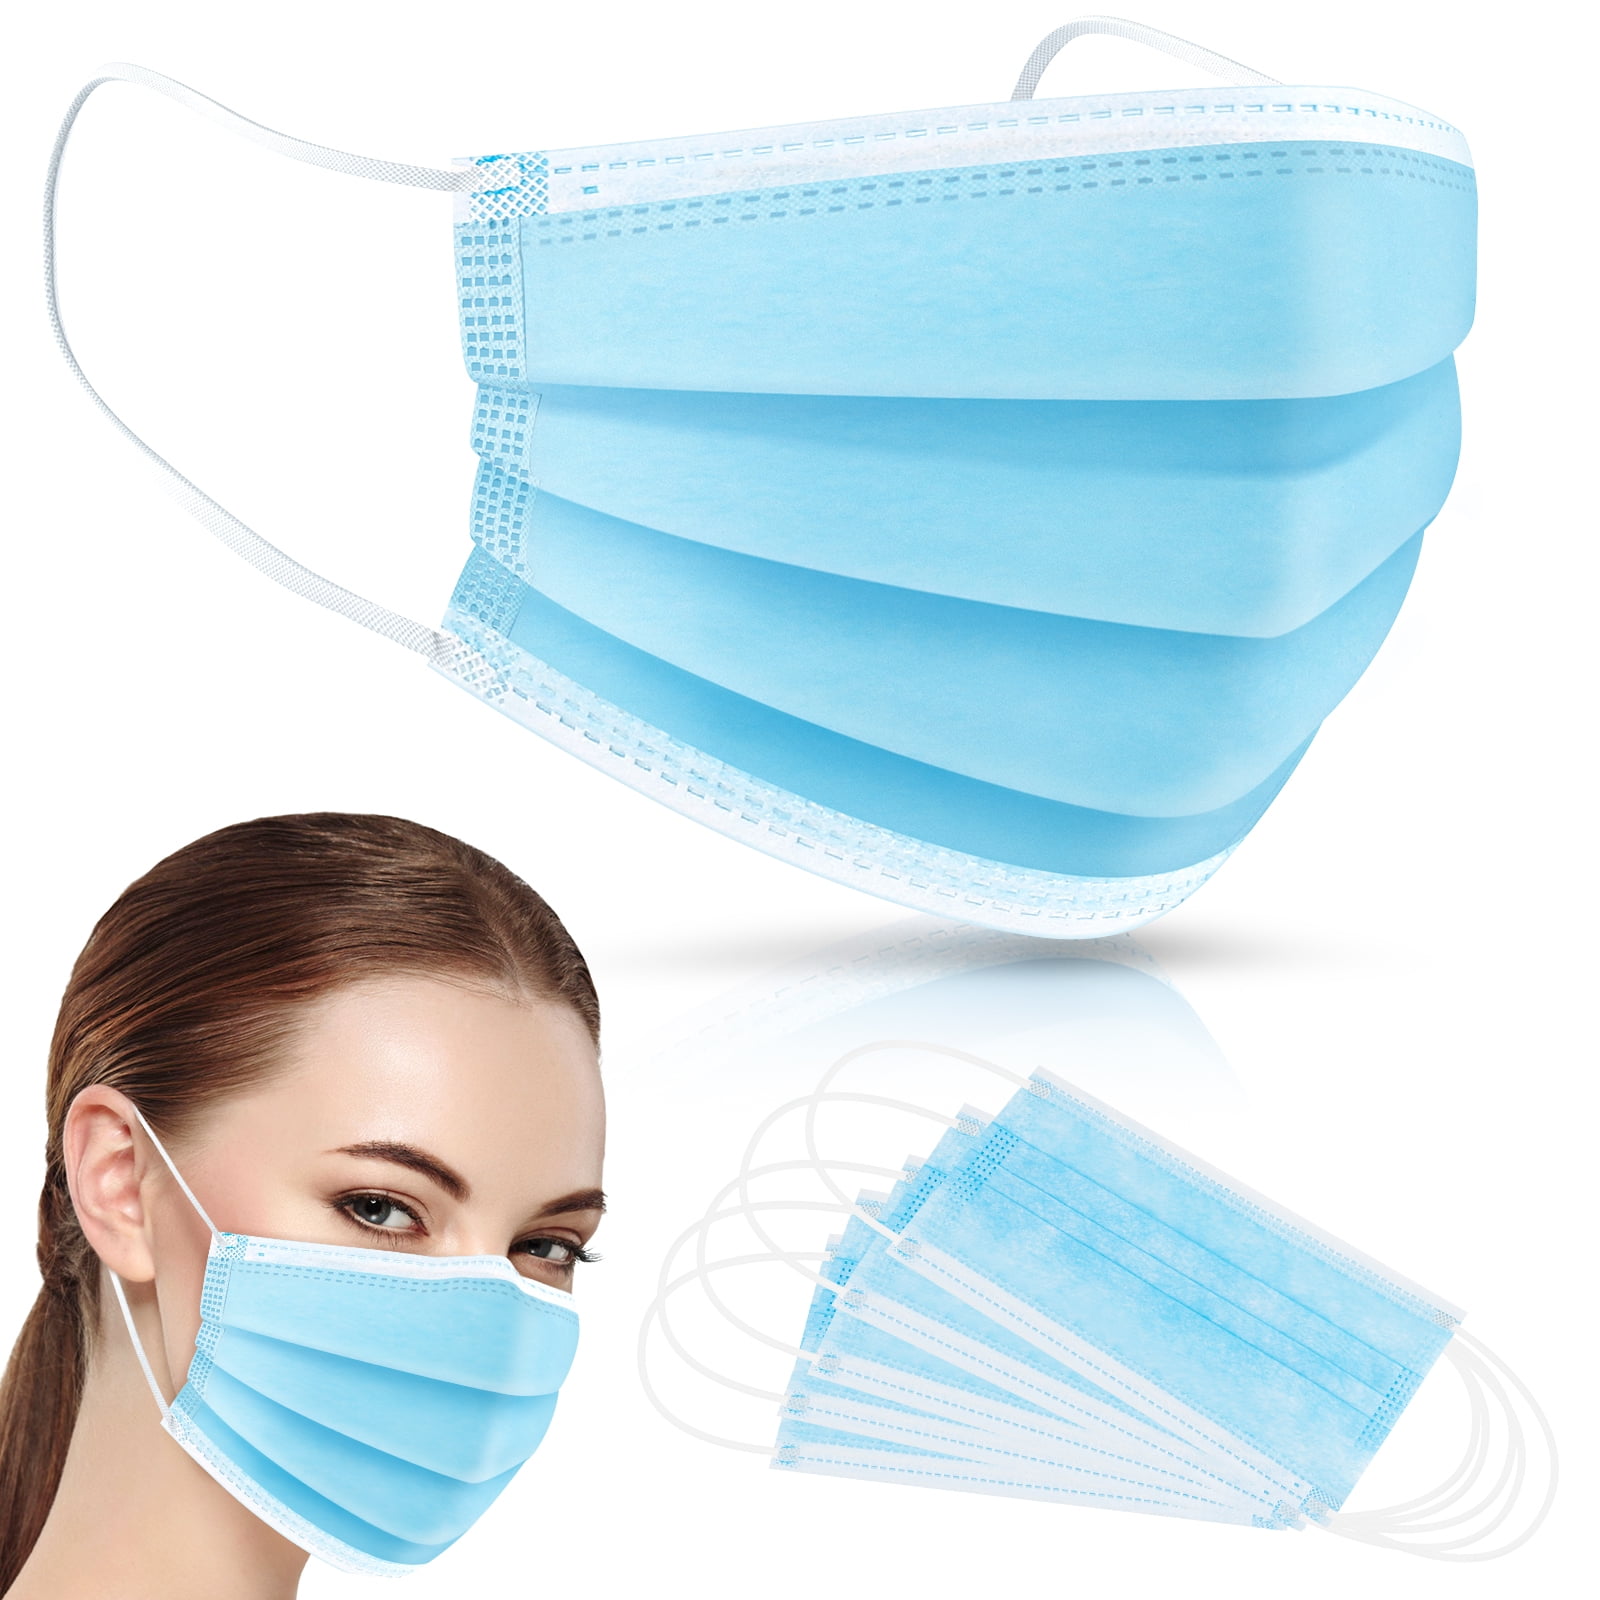 Zoushen Face Mask 100PCS Adult Black Disposable Masks 3-Layer Filter  Protection Breathable Dust Masks with Elastic Ear Loop for Men Women